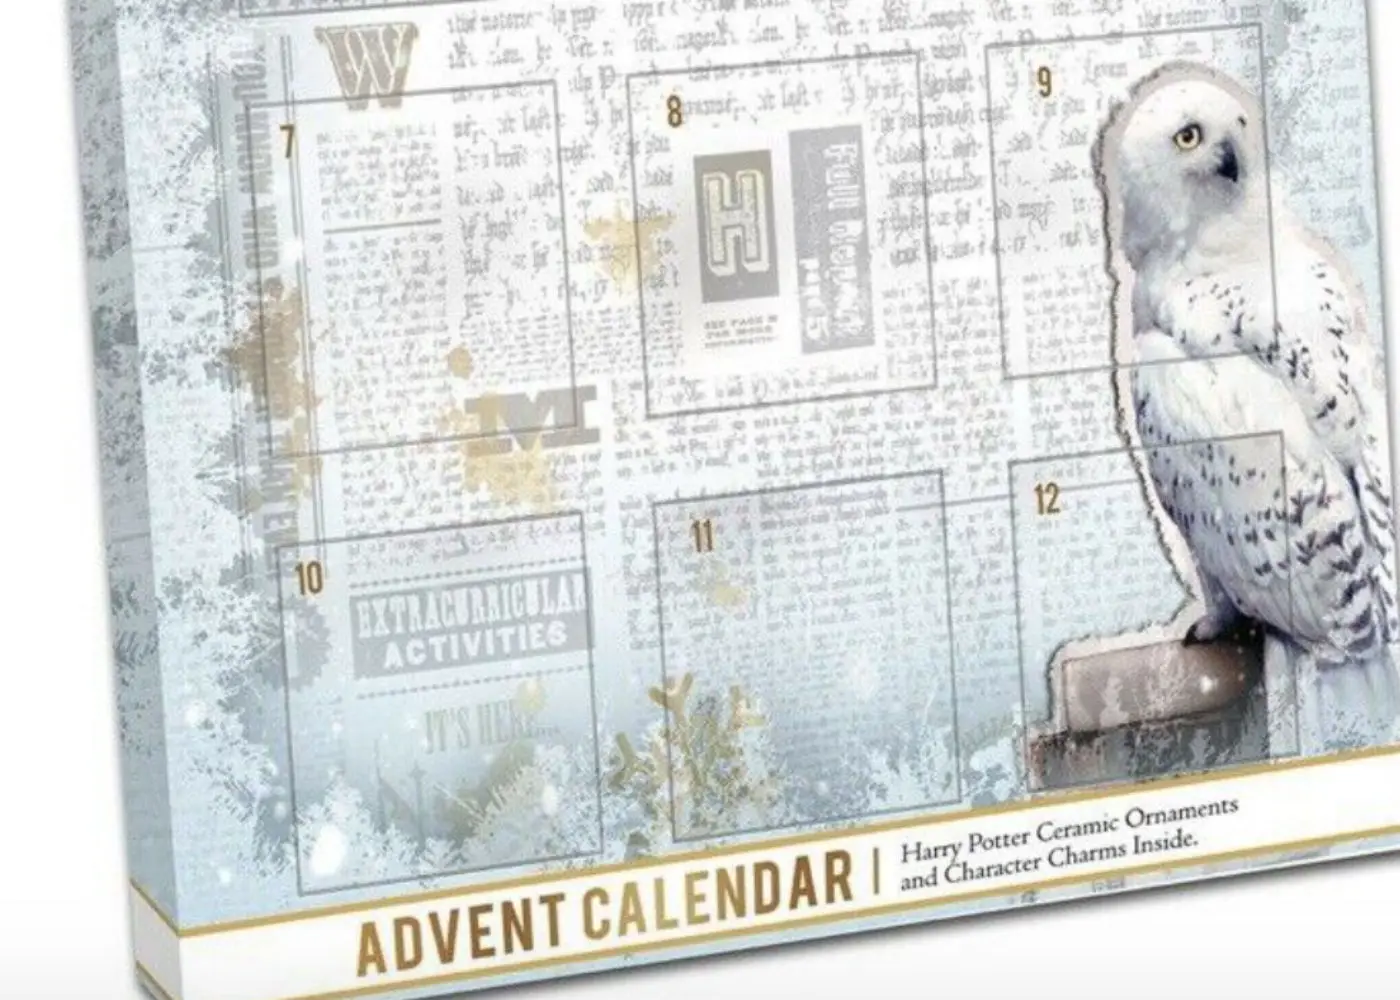 5. Harry Potter Wizarding World 12 Days of Ceramic Ornaments: $59 at eBay